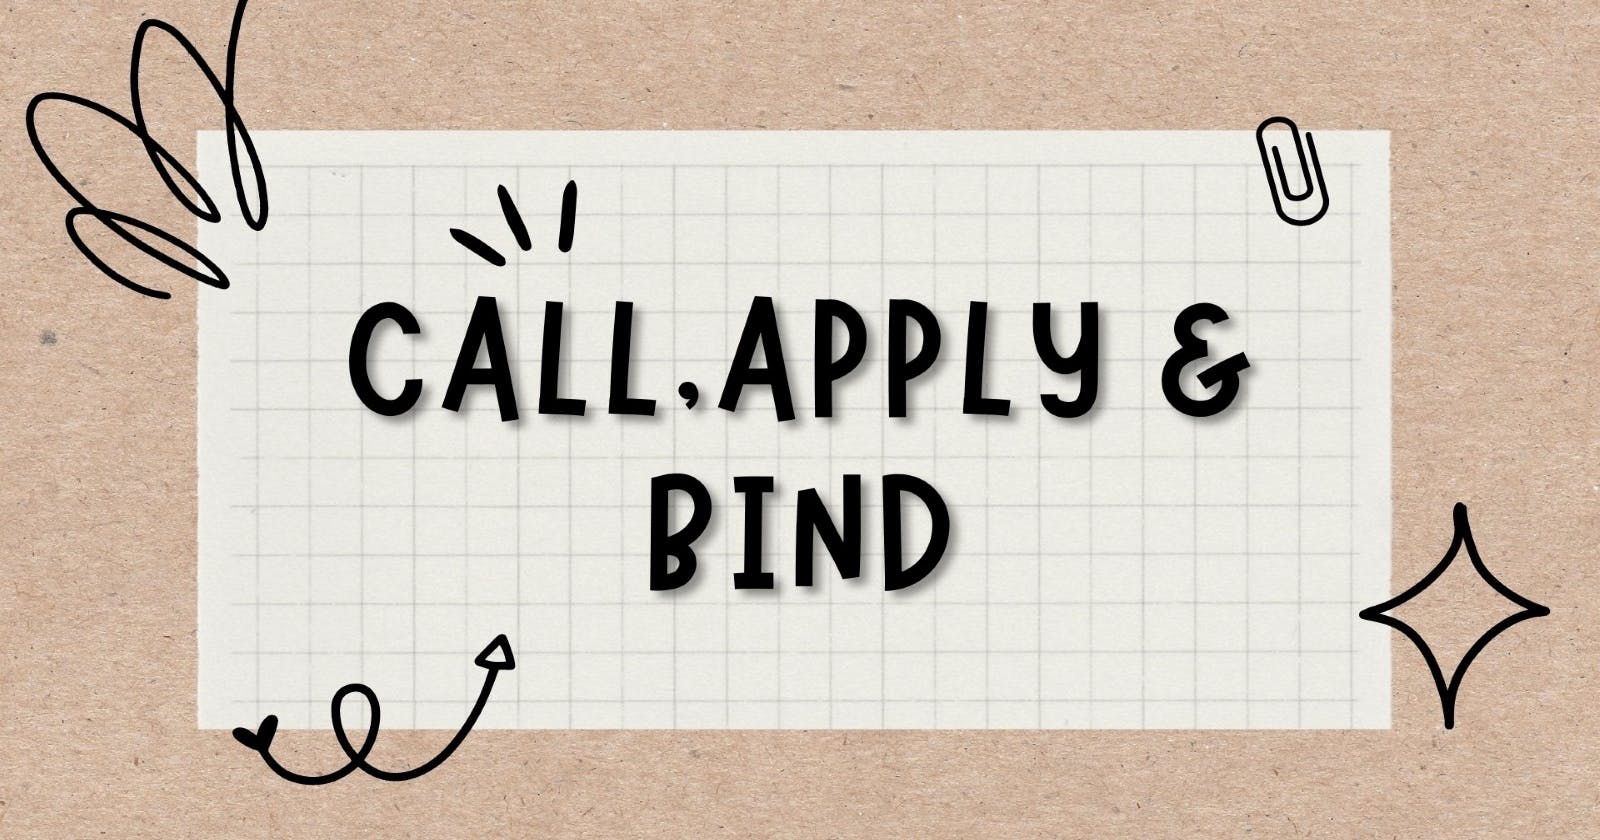 Call, Apply, Bind & their Polyfills